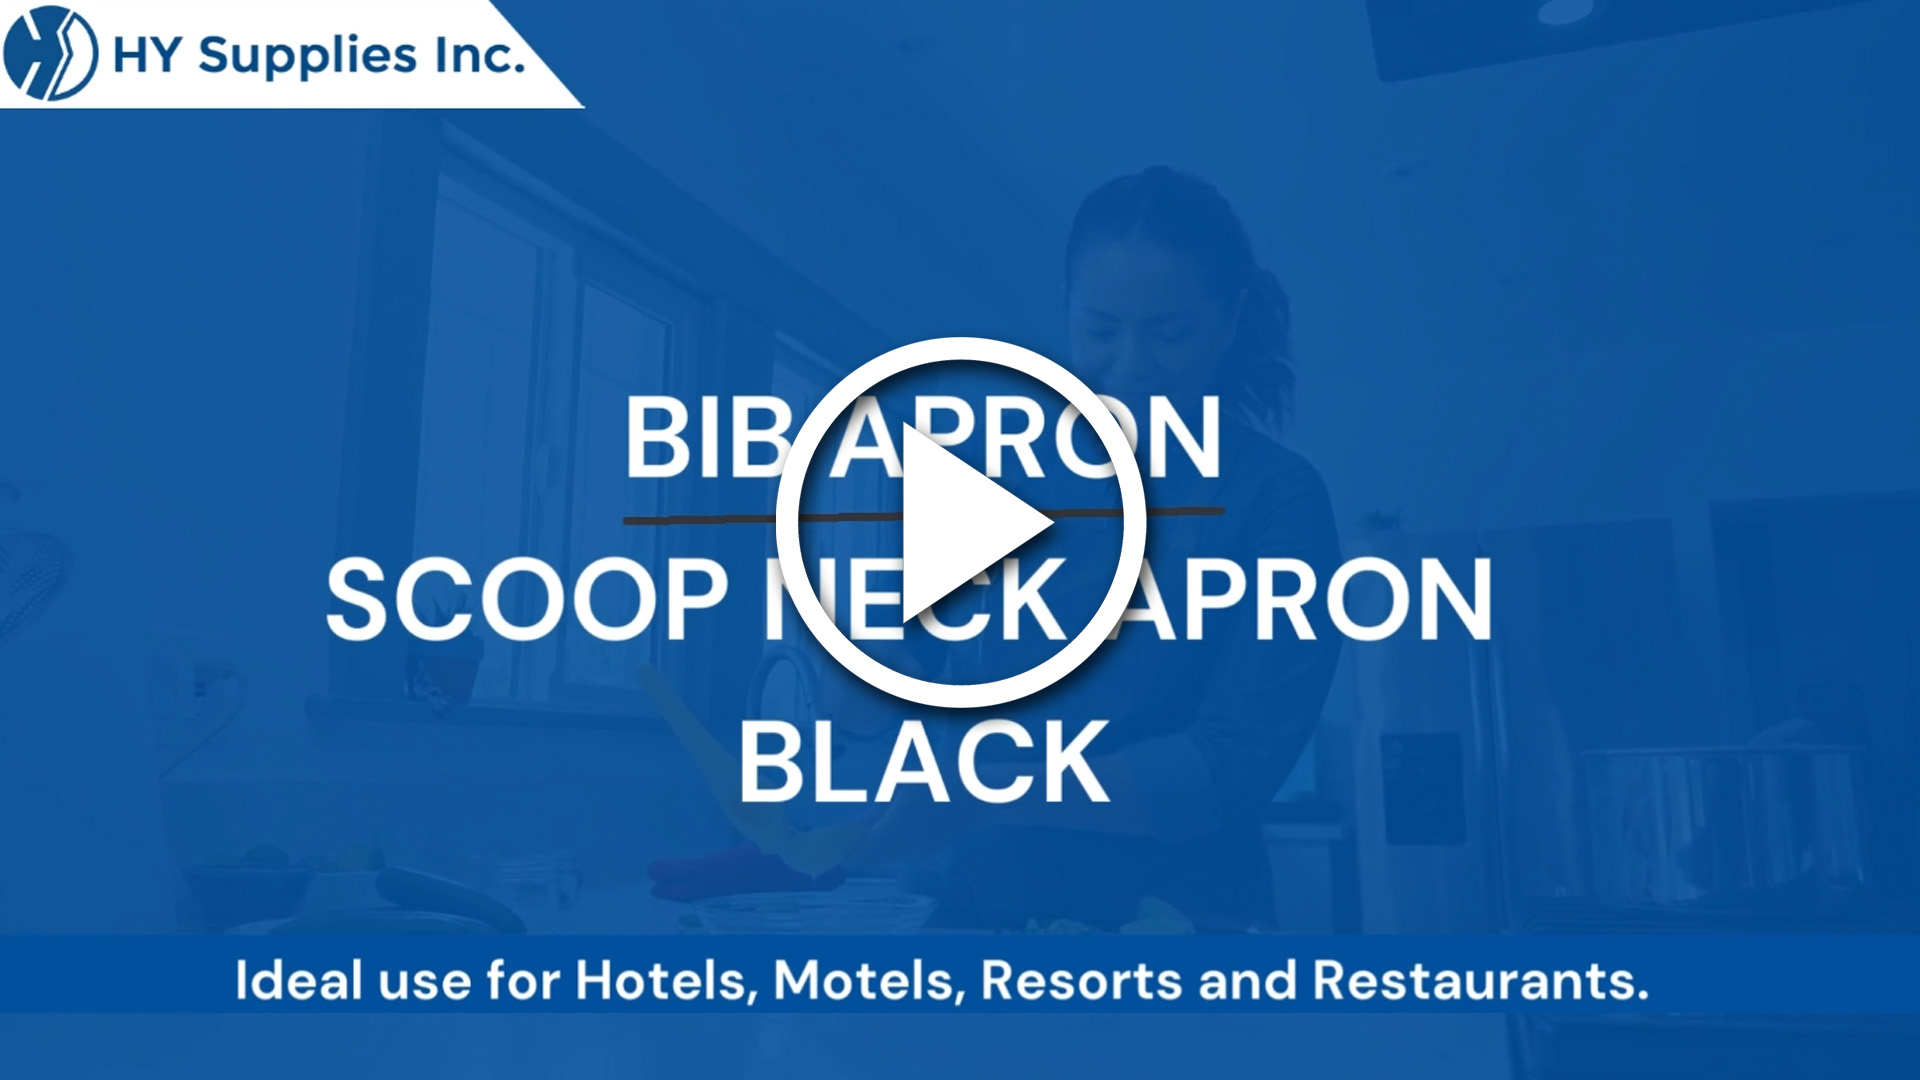 Bib Apron - Scoop Neck Apron - Black 